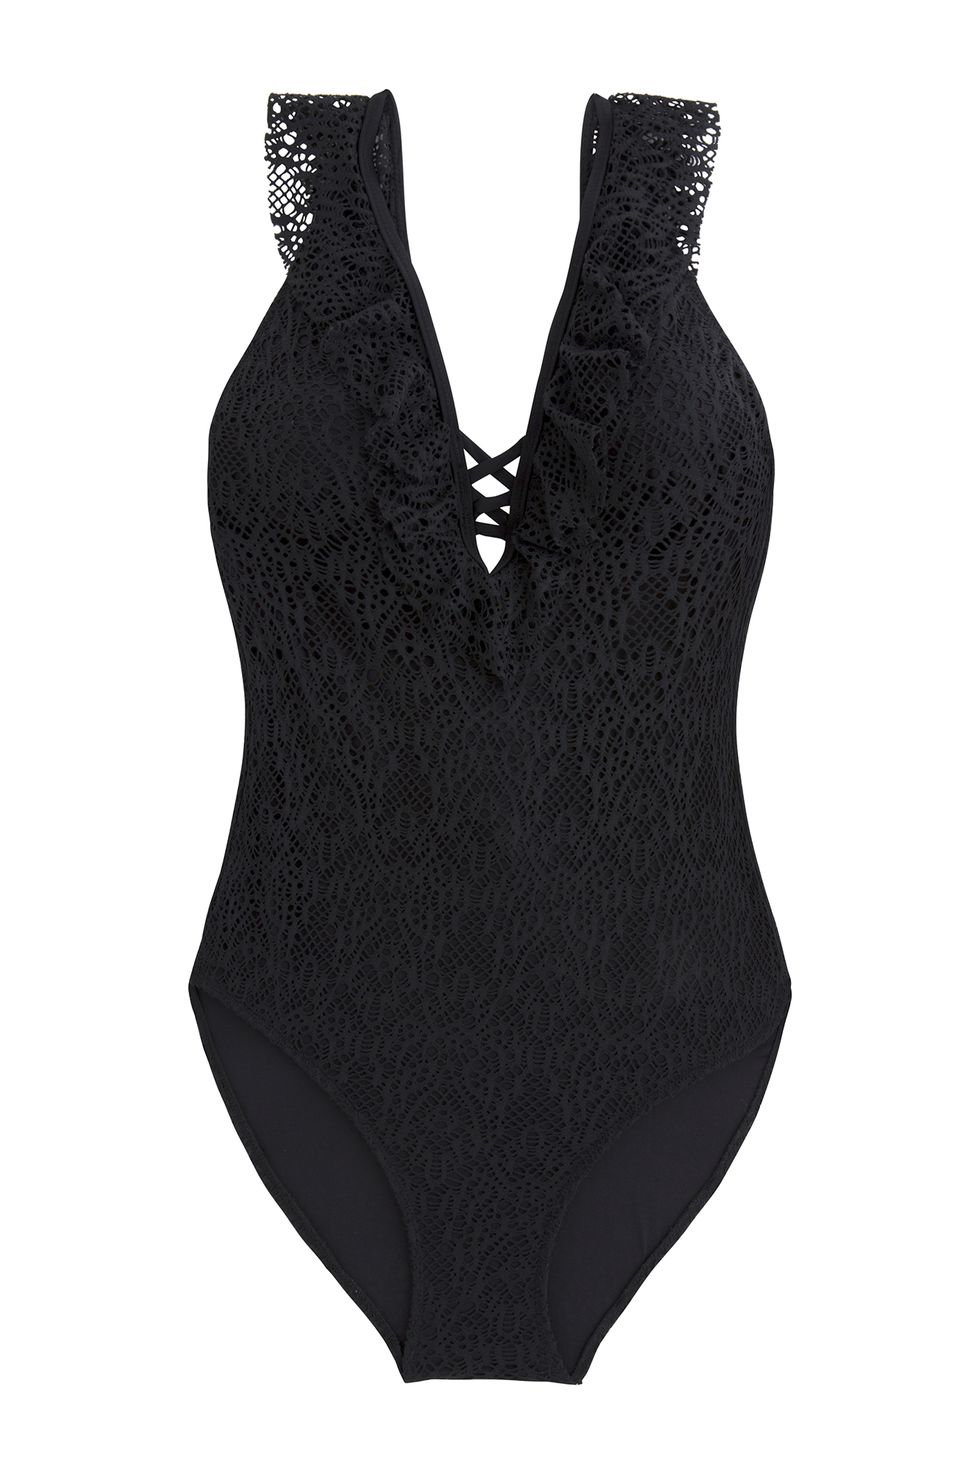 Clothing, Black, One-piece swimsuit, Monokini, Swimwear, Maillot, Neck, Dress, Lingerie top, 